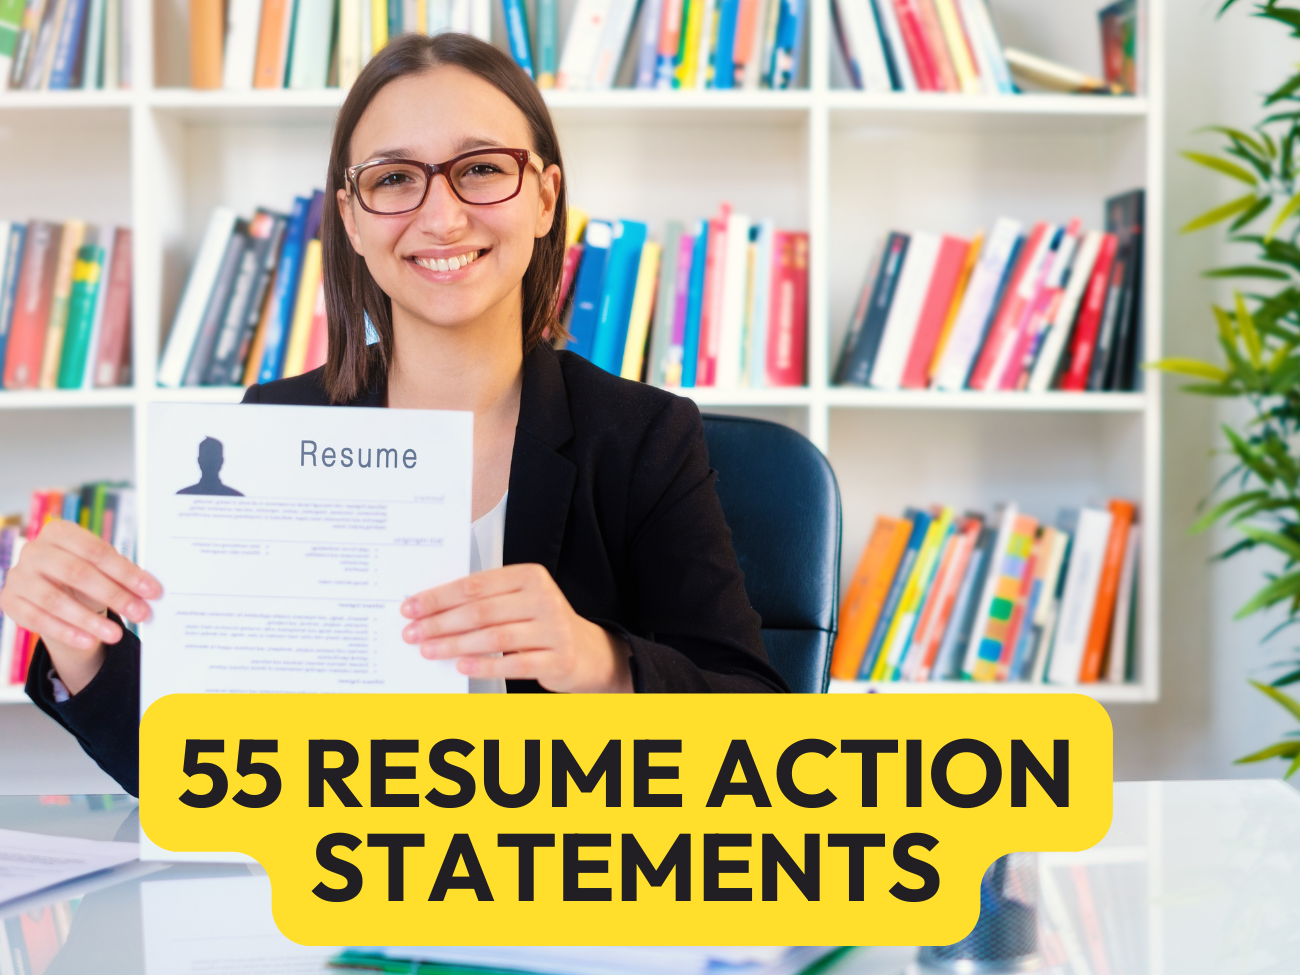 Resume action statements